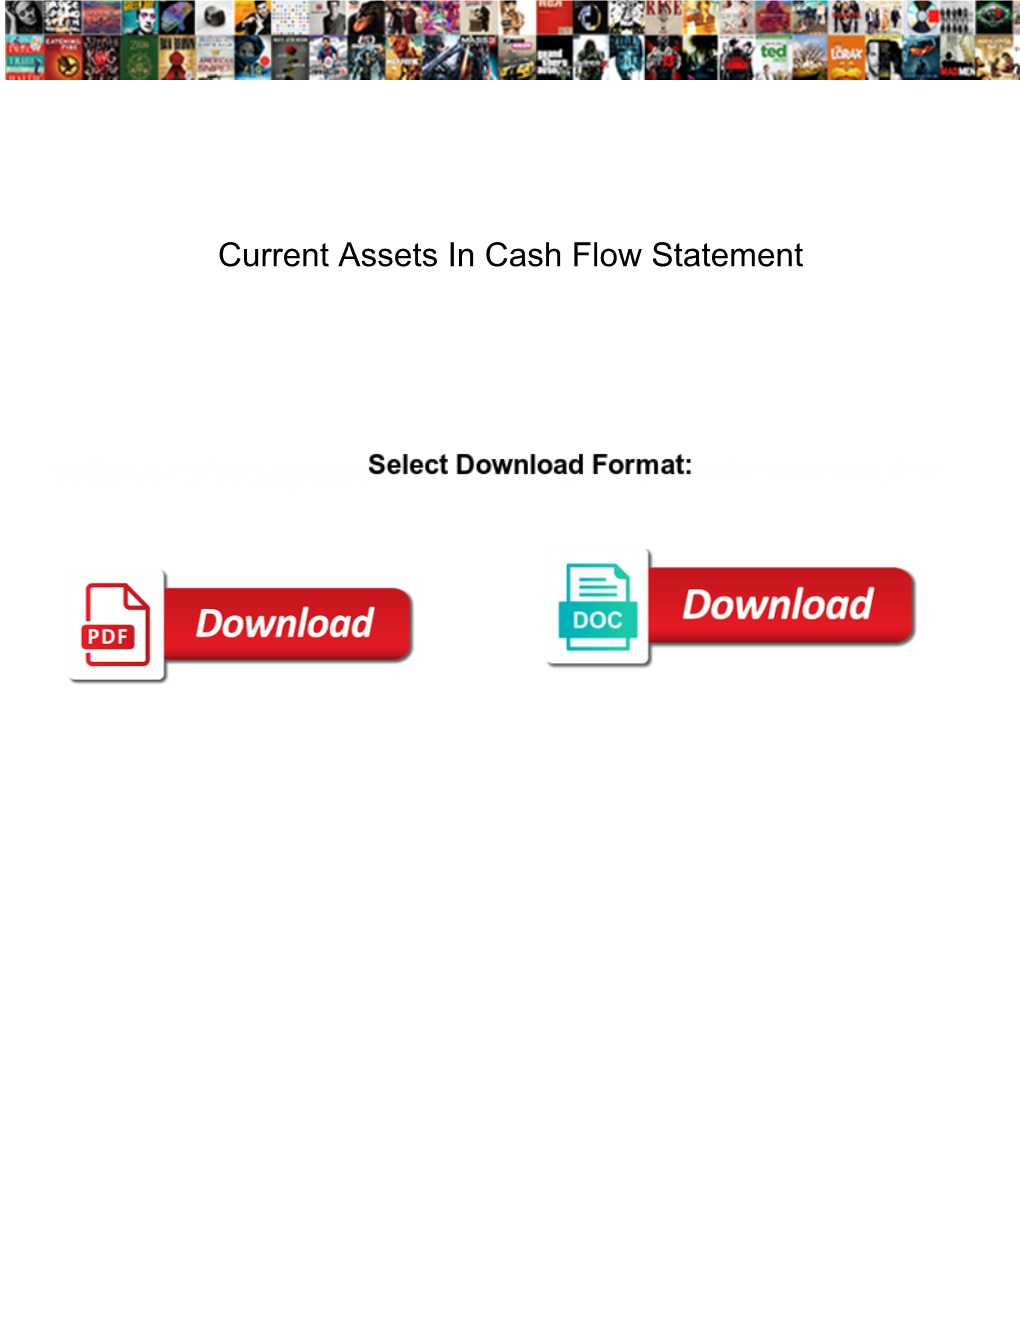 Current Assets in Cash Flow Statement